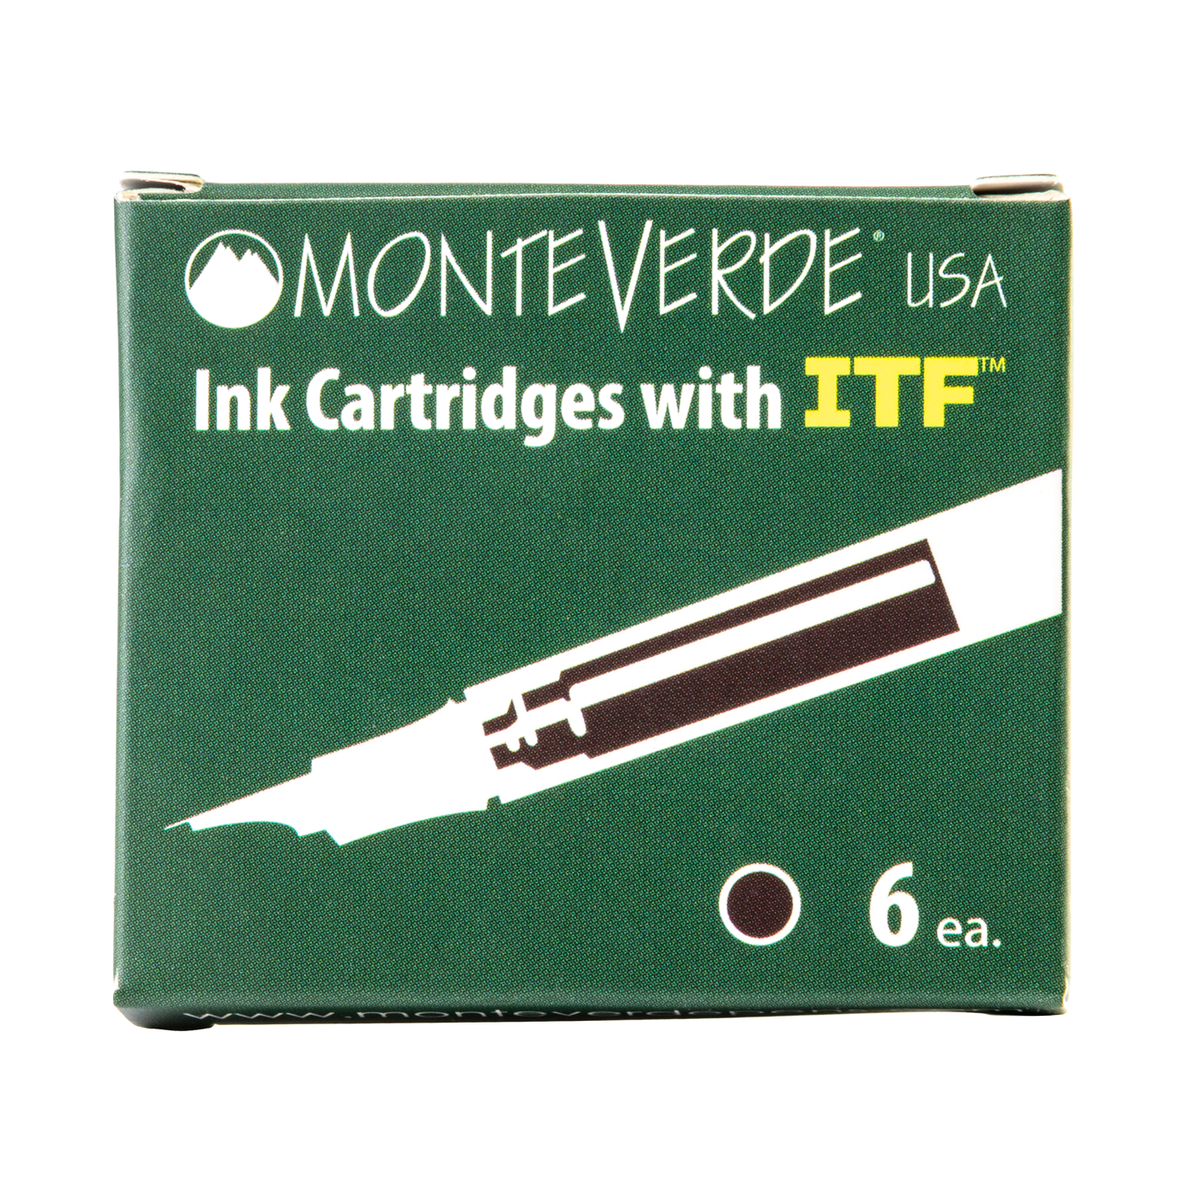 Monteverde Black ITF Cartridges - 6 Pack